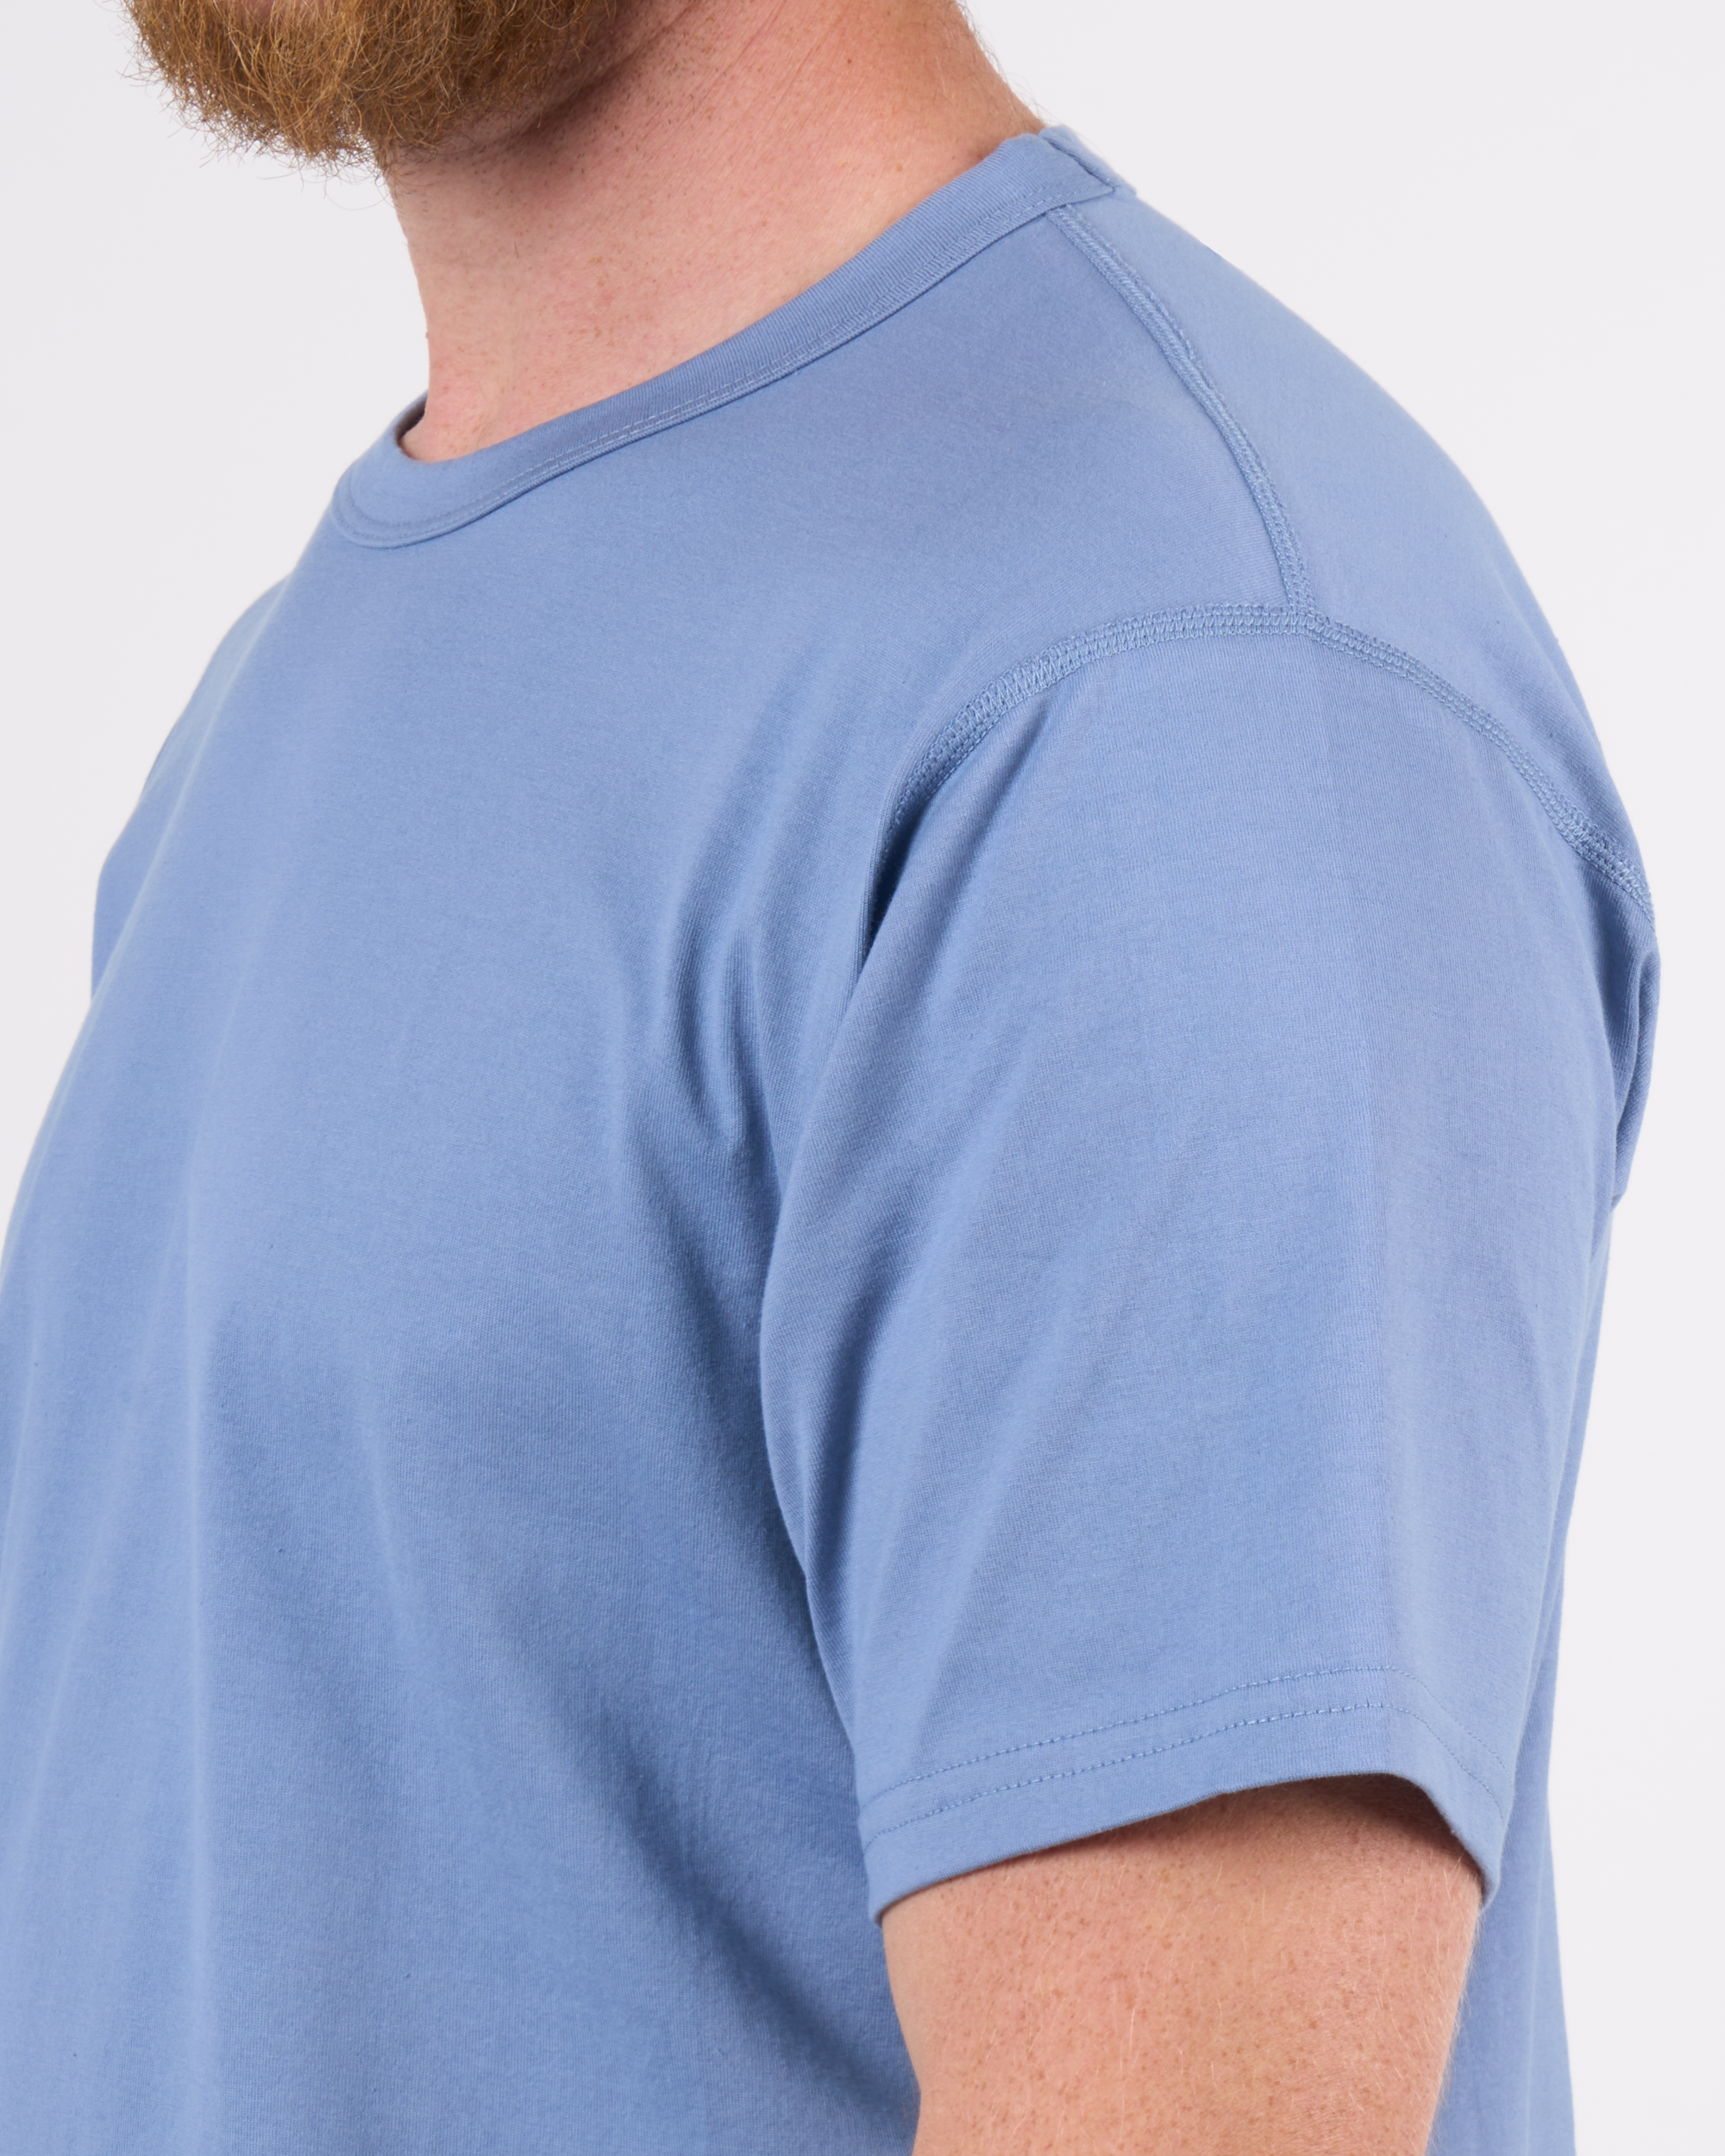 Foreign Rider Co Supima Cotton Metallic Blue Short Sleeve T-Shirt Shoulder Flat-lock Stitch Detail